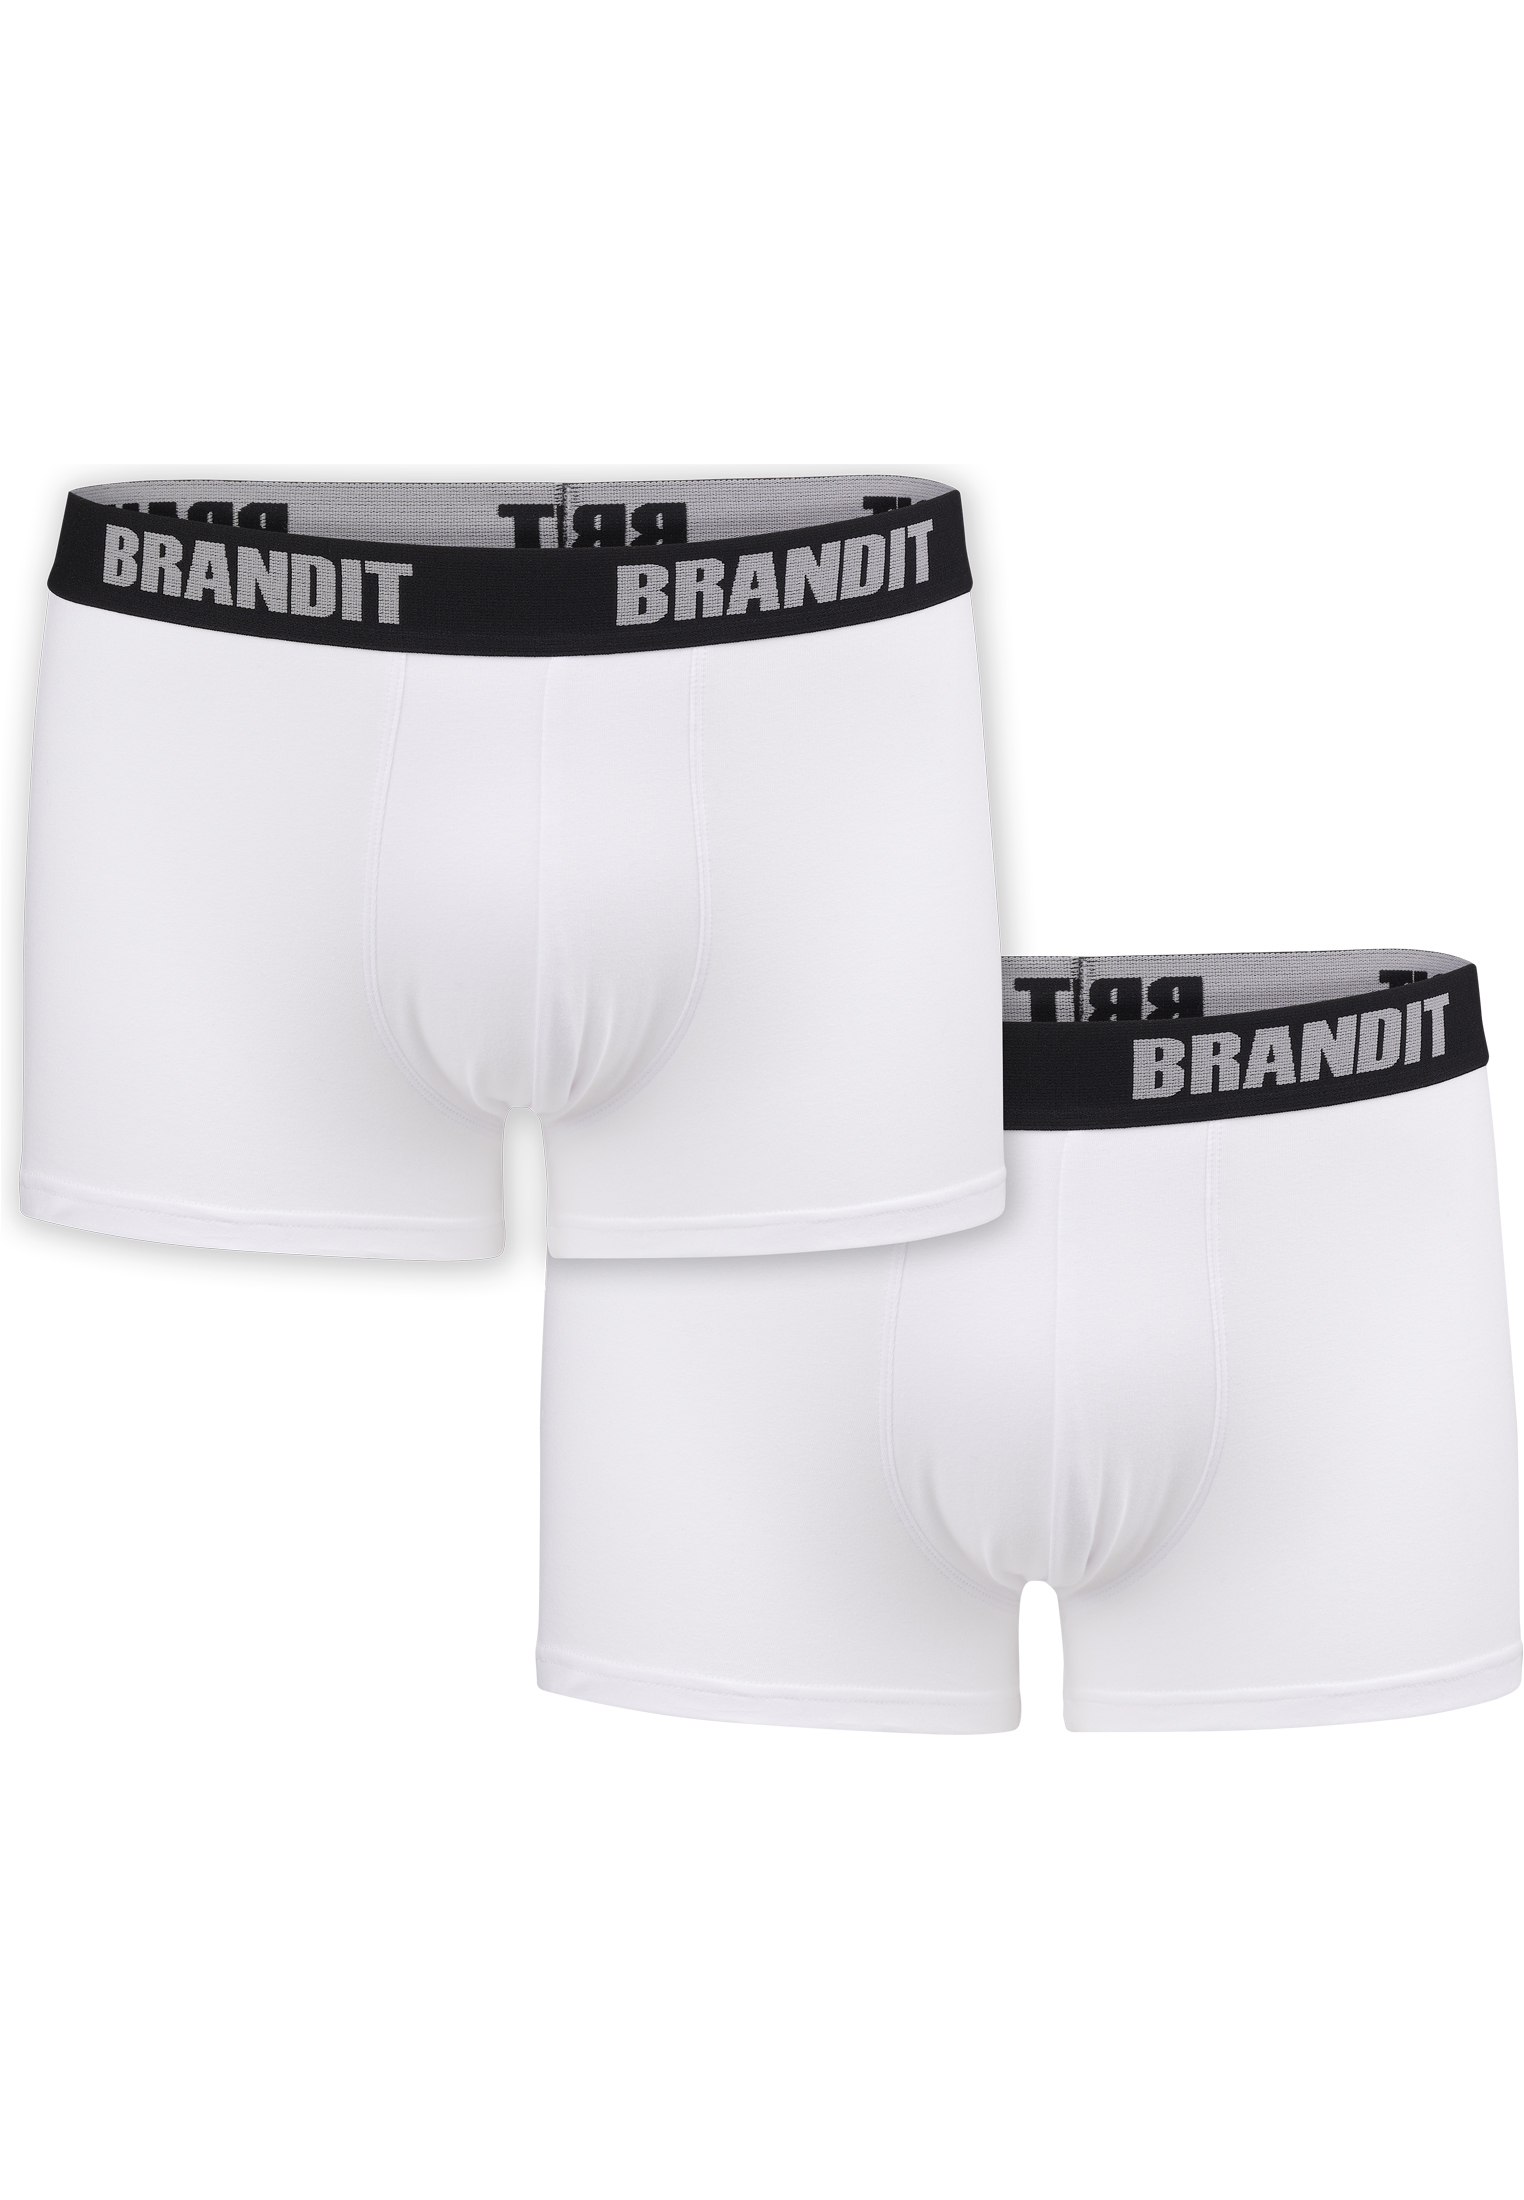 Underwear Boxershorts Logo 2er Pack in Farbe wht/wht